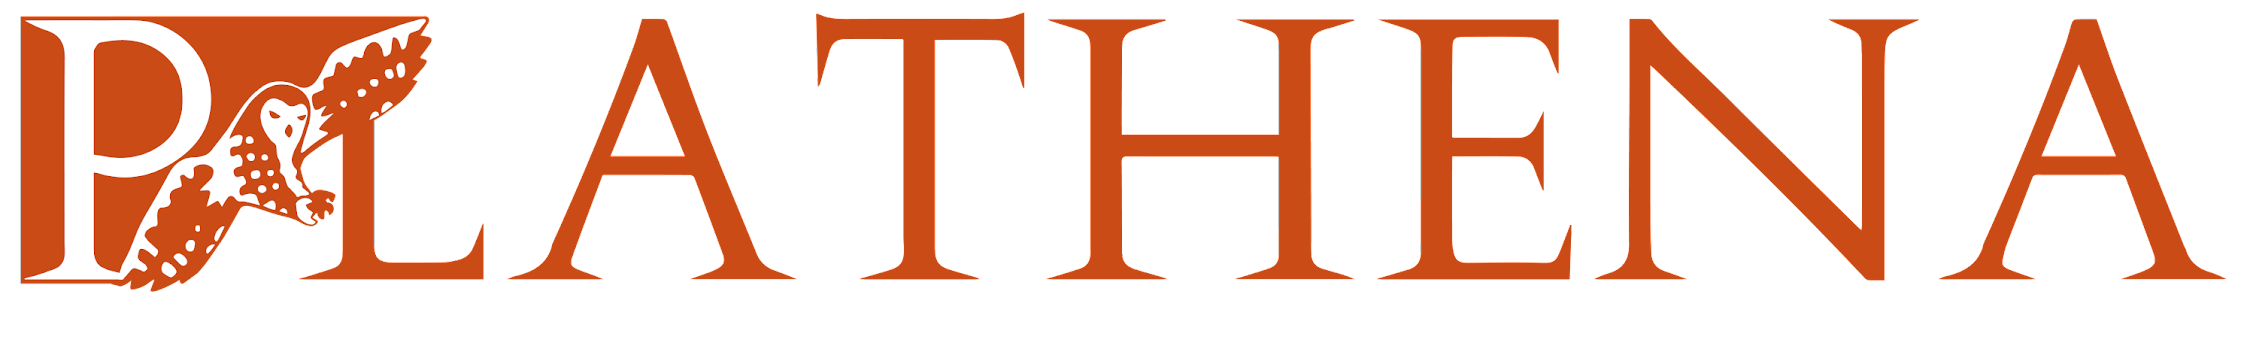 Plathena logo